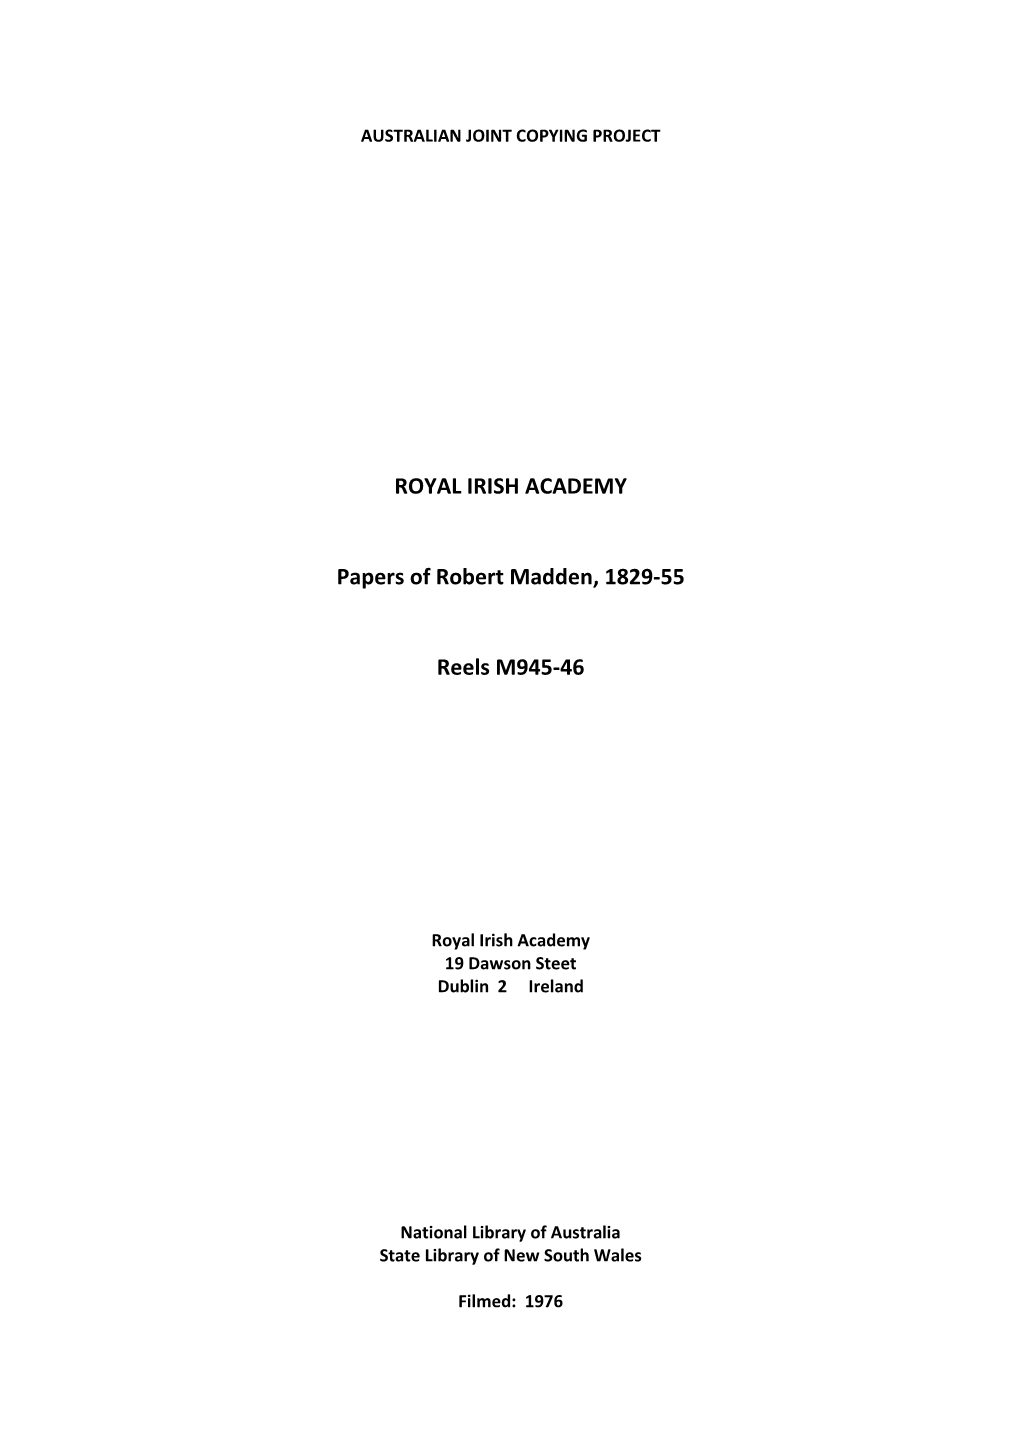 ROYAL IRISH ACADEMY Papers of Robert Madden, 1829-55 Reels